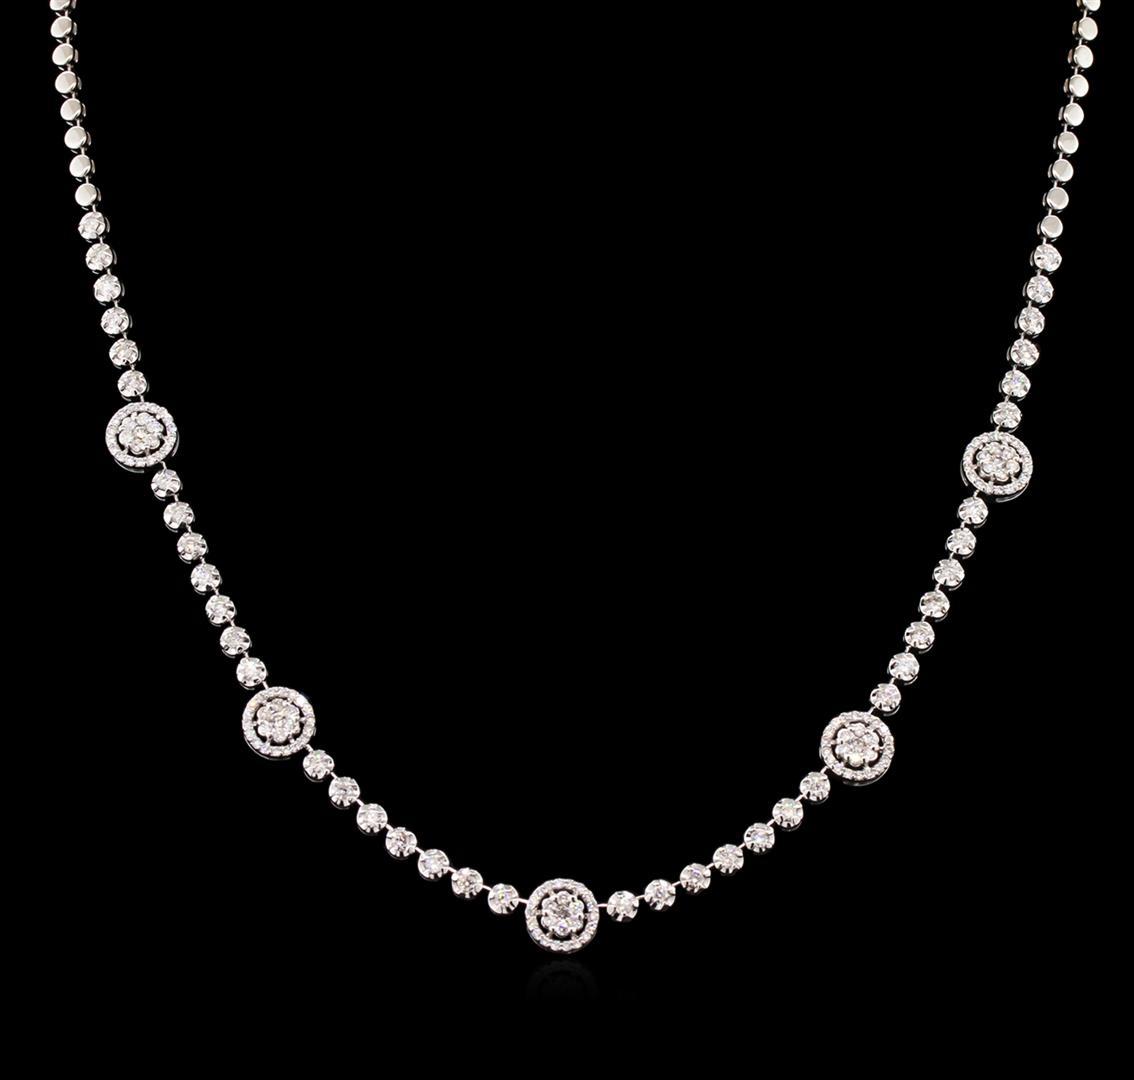 2.53 ctw Diamond Necklace - 14KT White Gold